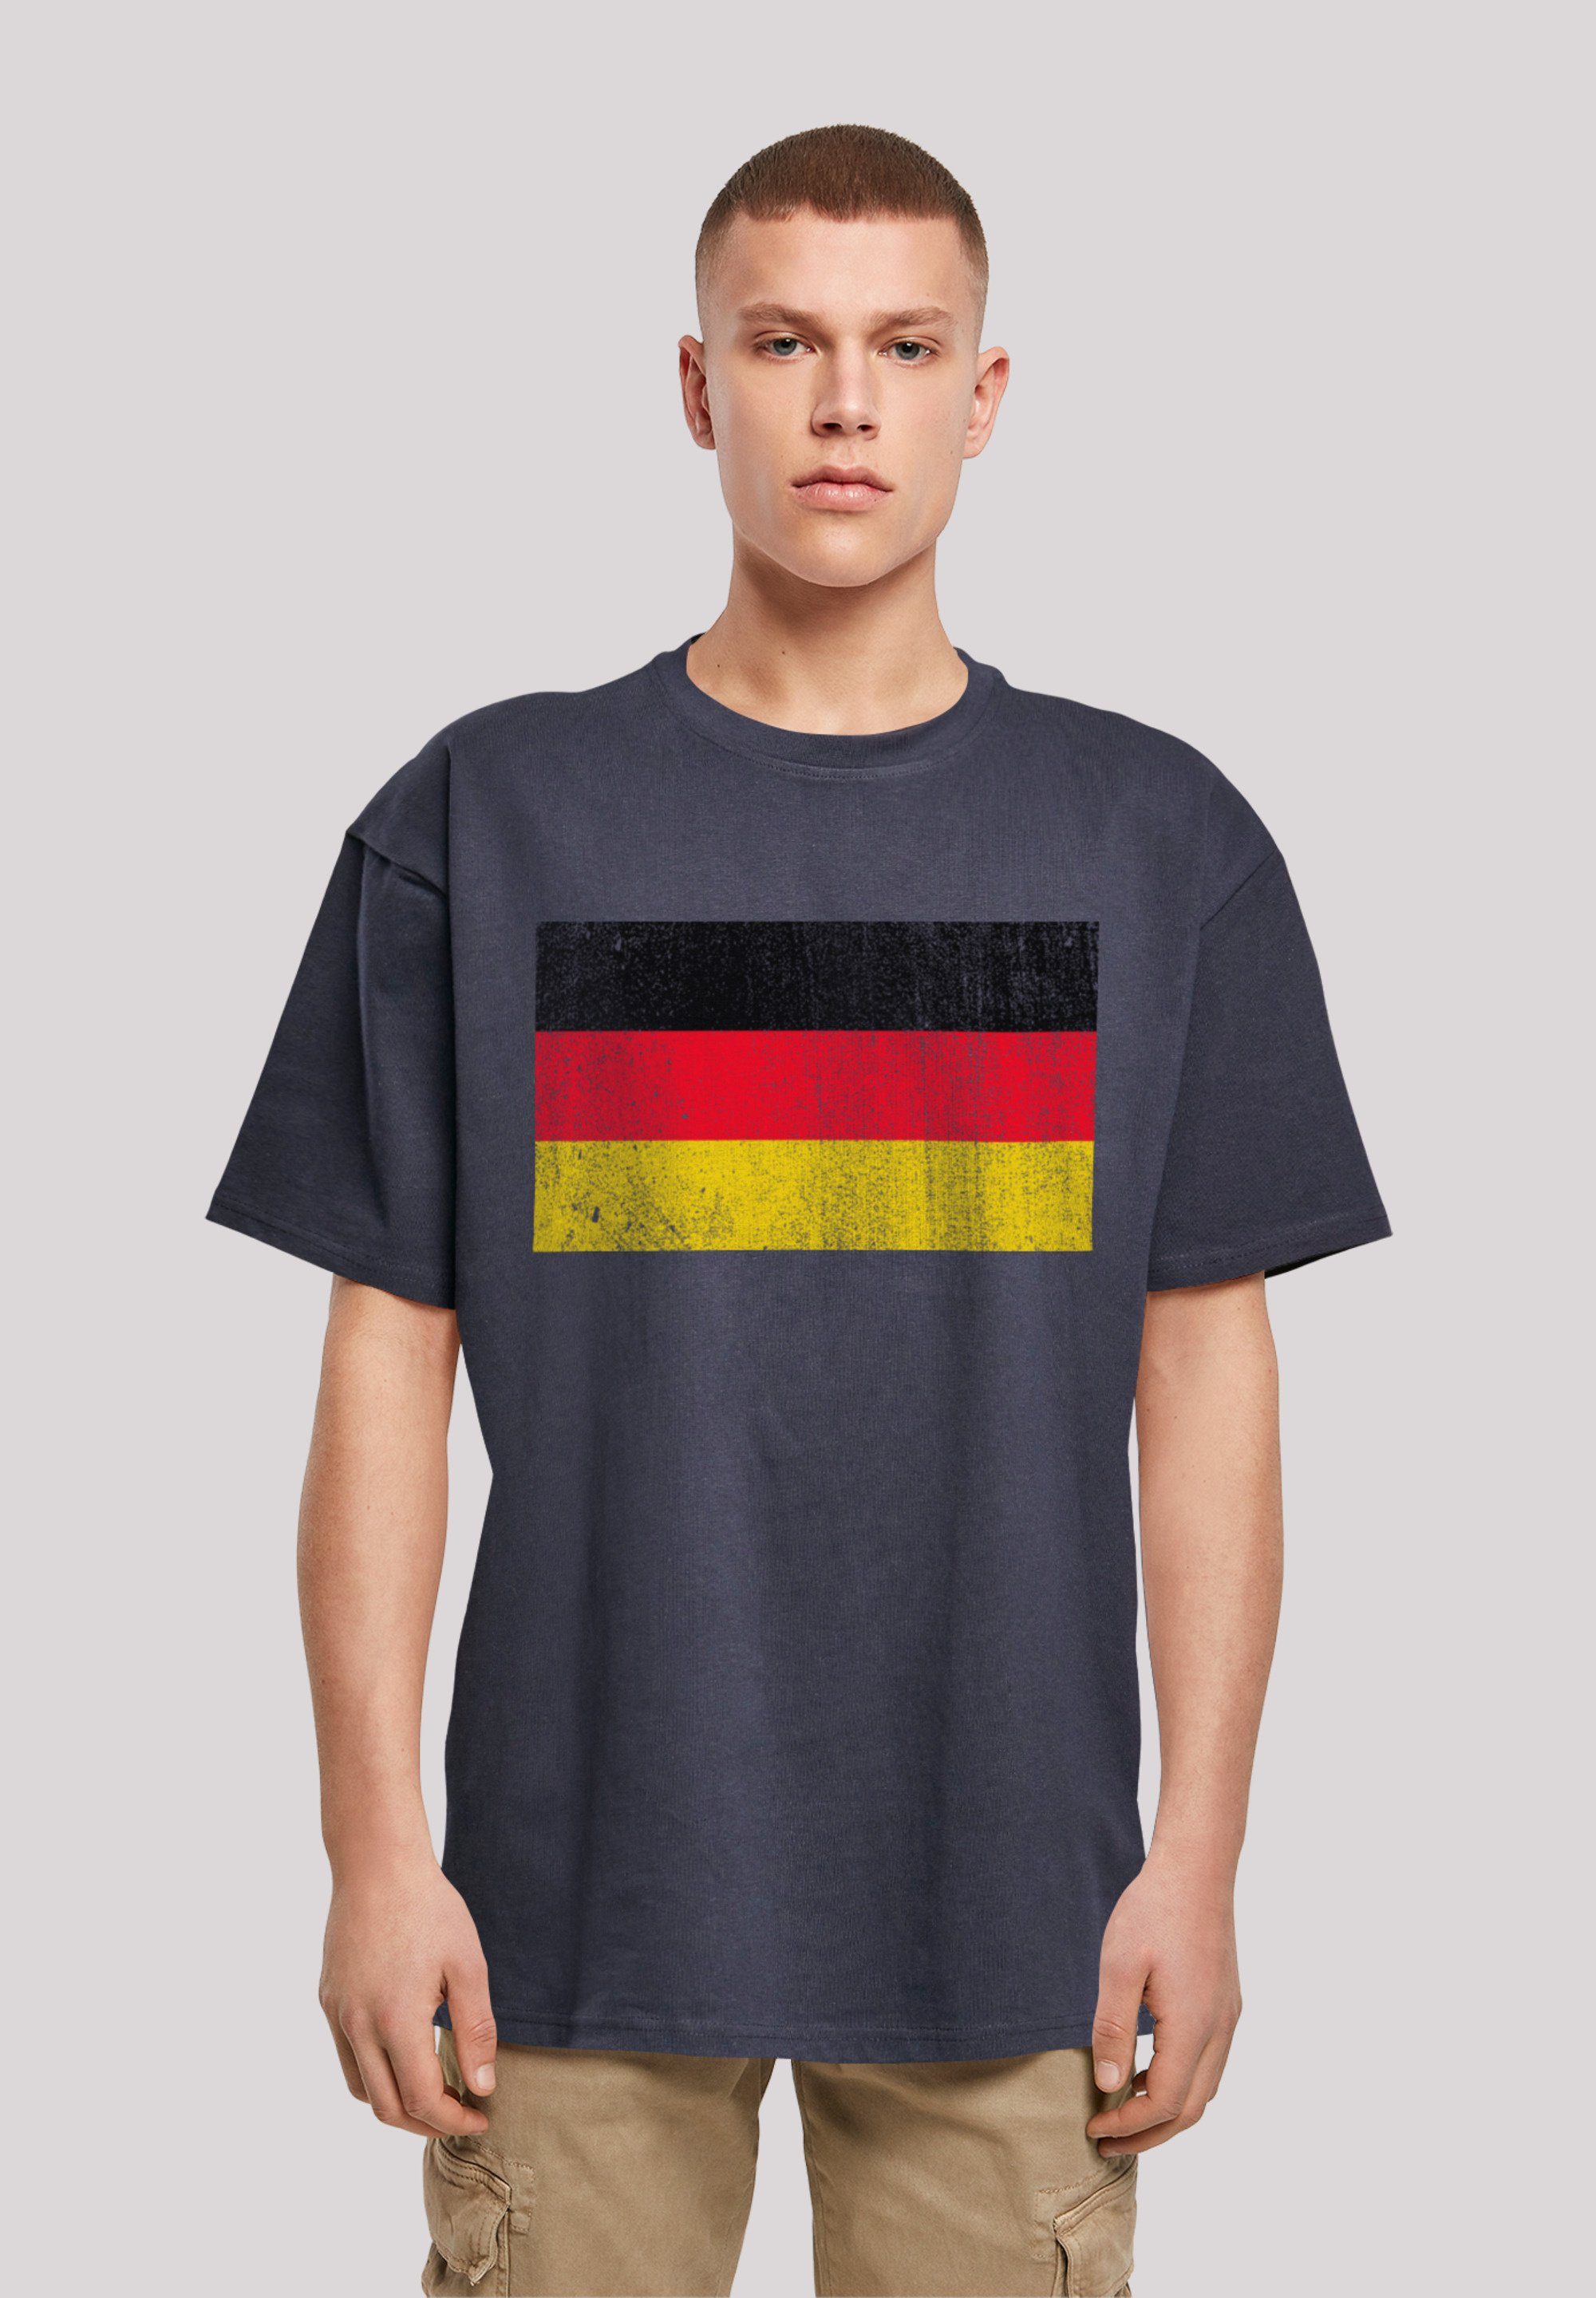 F4NT4STIC T-Shirt Germany Deutschland Flagge distressed Print navy